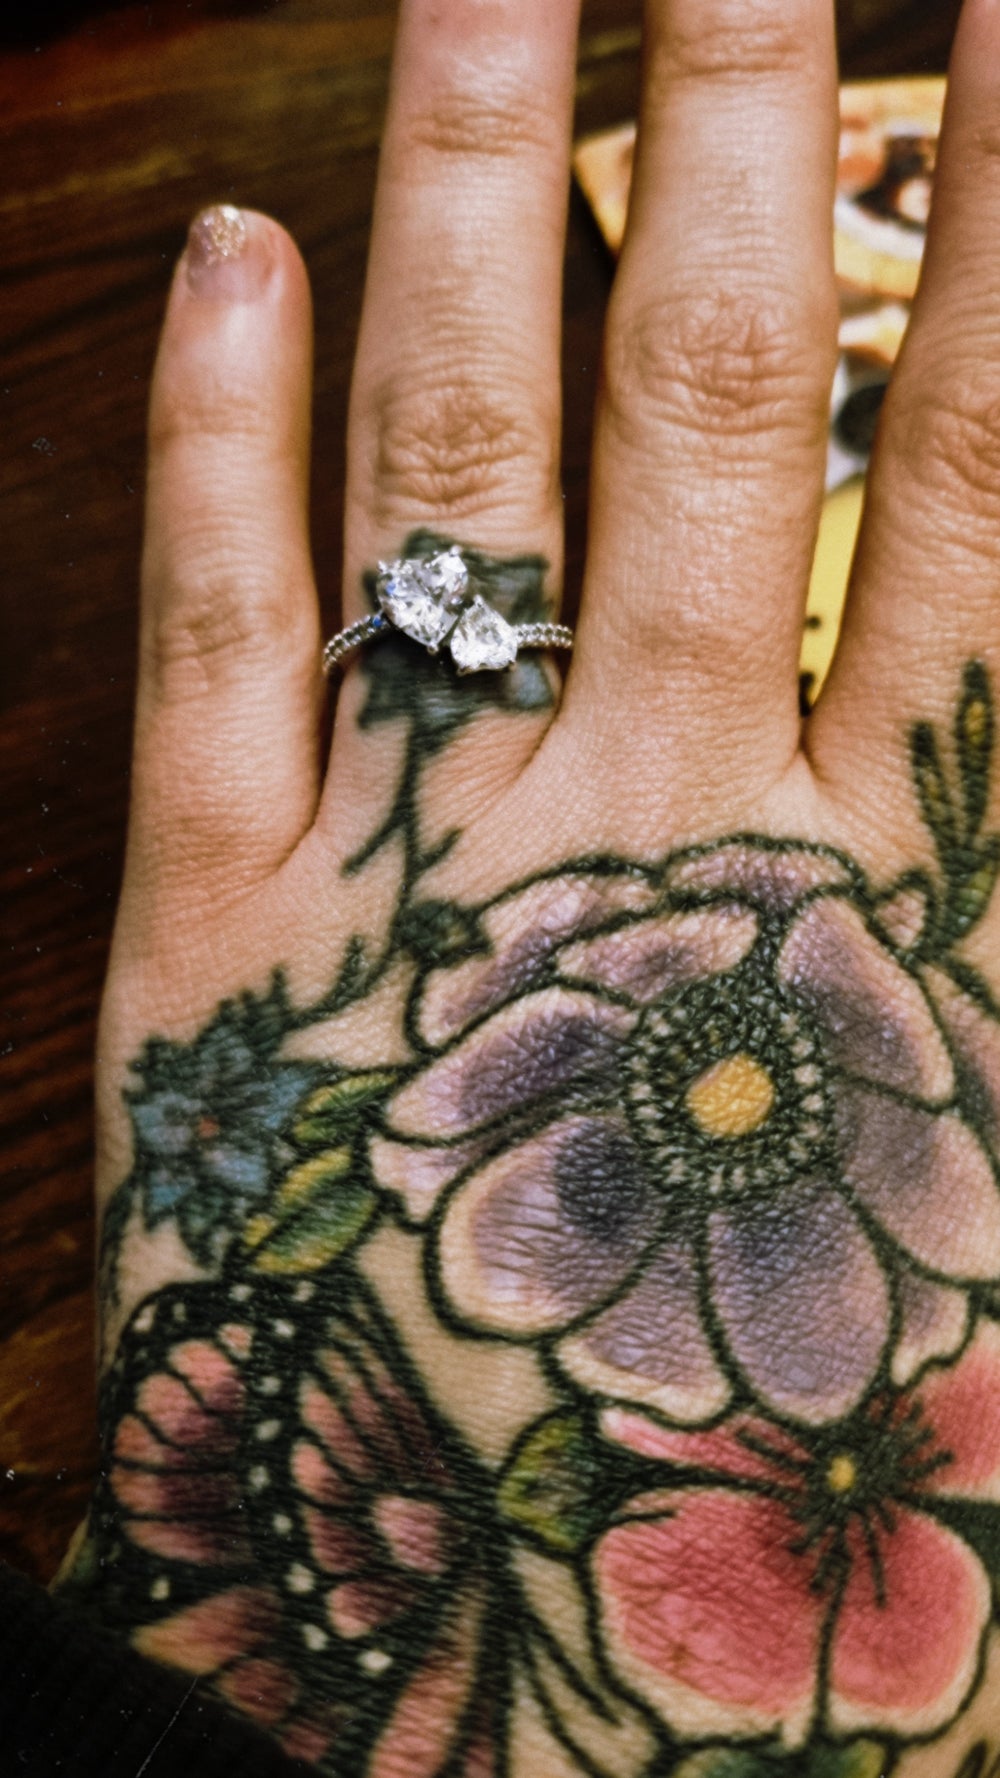 Laura O’Sullivan’s Pandora engagement ring (Collect/PA Real Life)